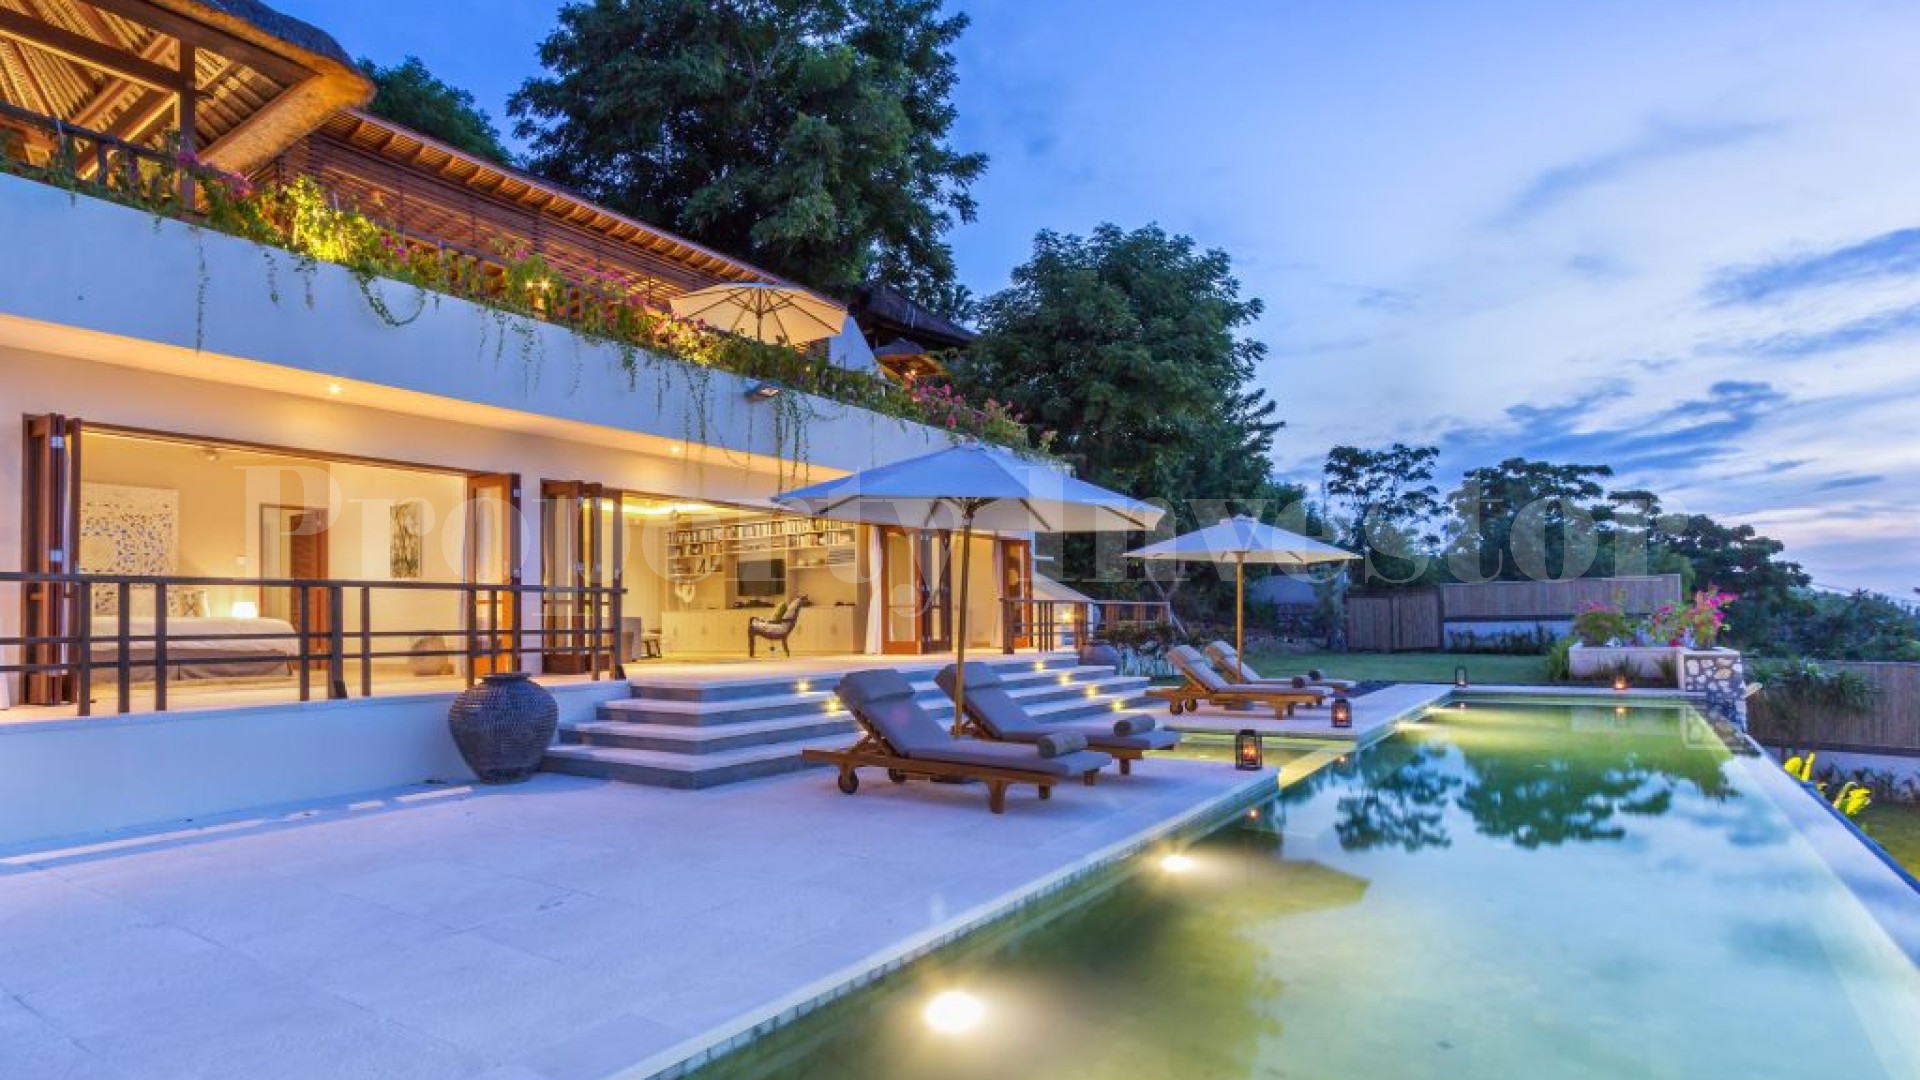 6 Bedroom Luxury Hillside Villa with Unobstructed Ocean Views for Sale in Bukit, Bali